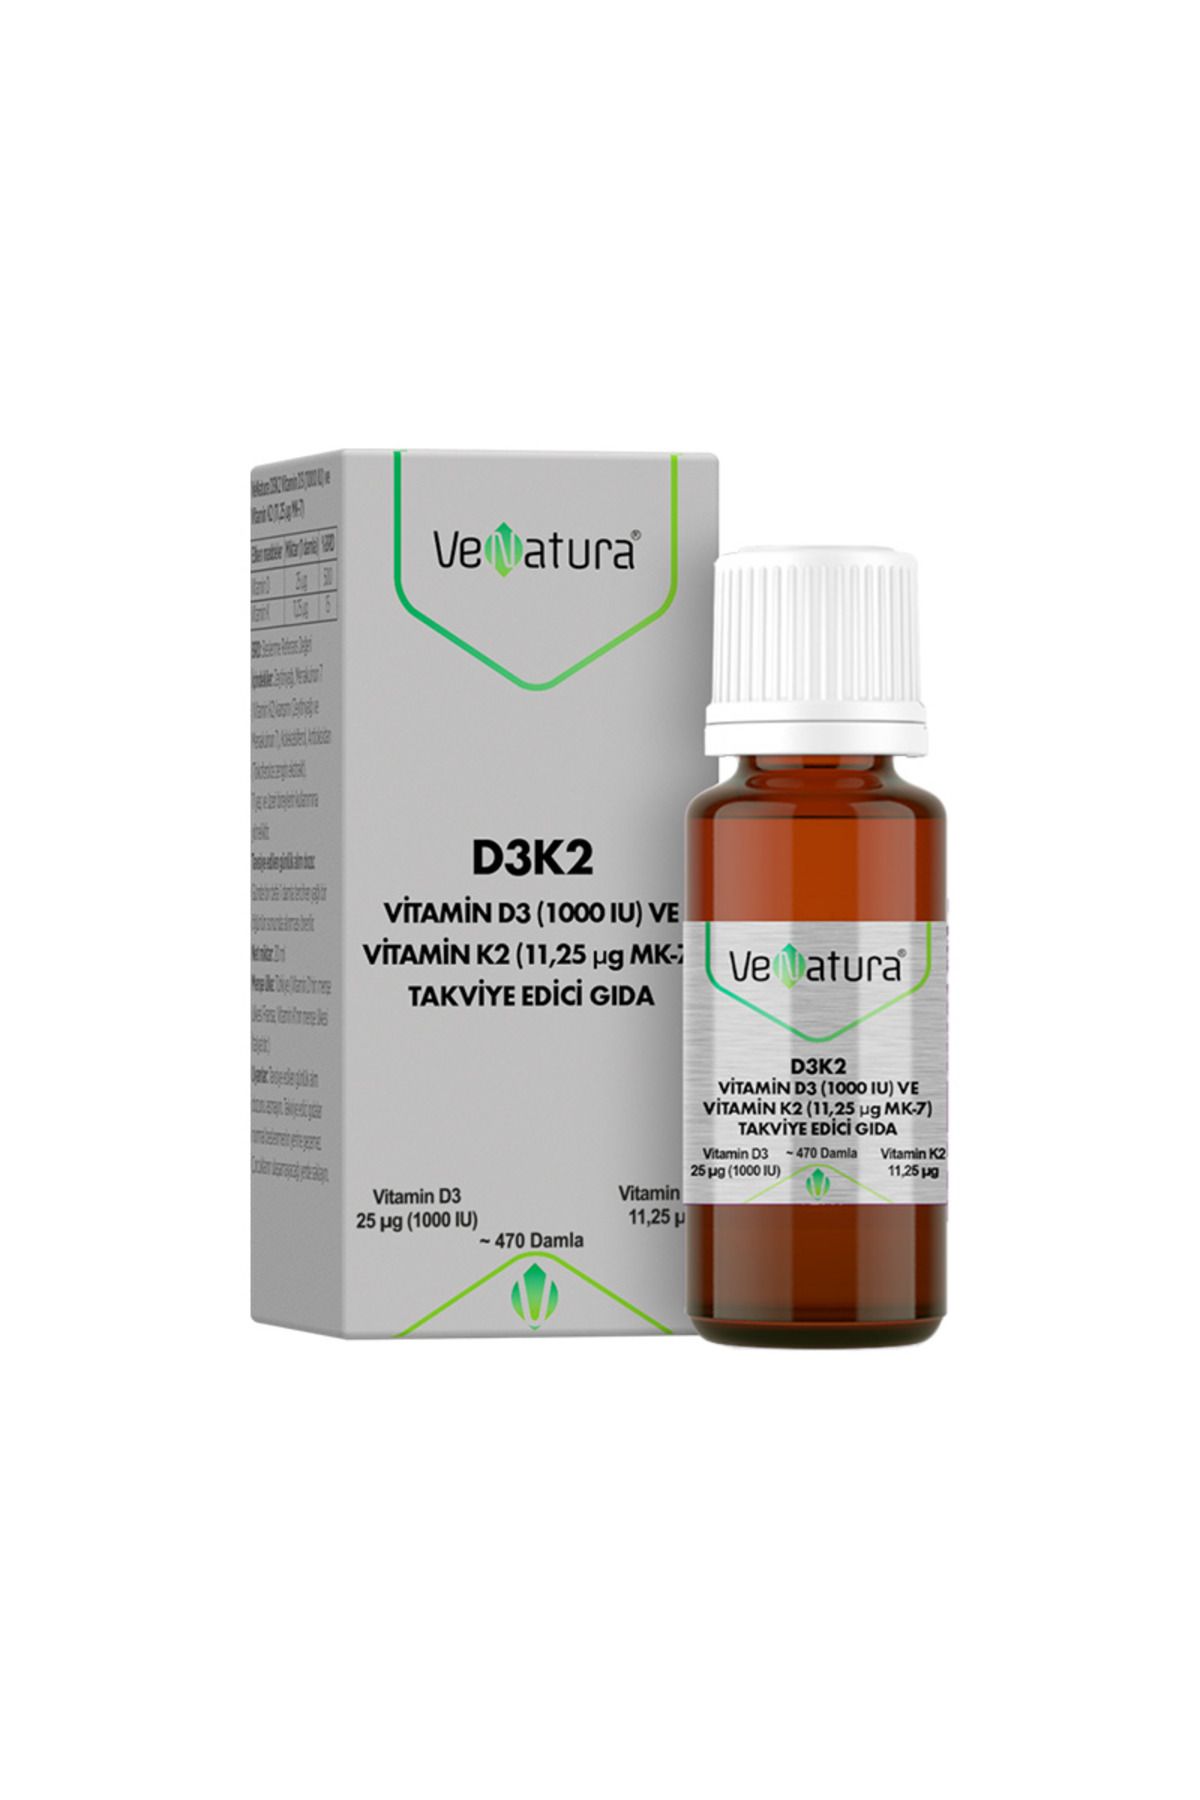 Venatura D3k2 Vitamin D3 Ve K2 (11,25 MCG MK-7) Damla 20 ml